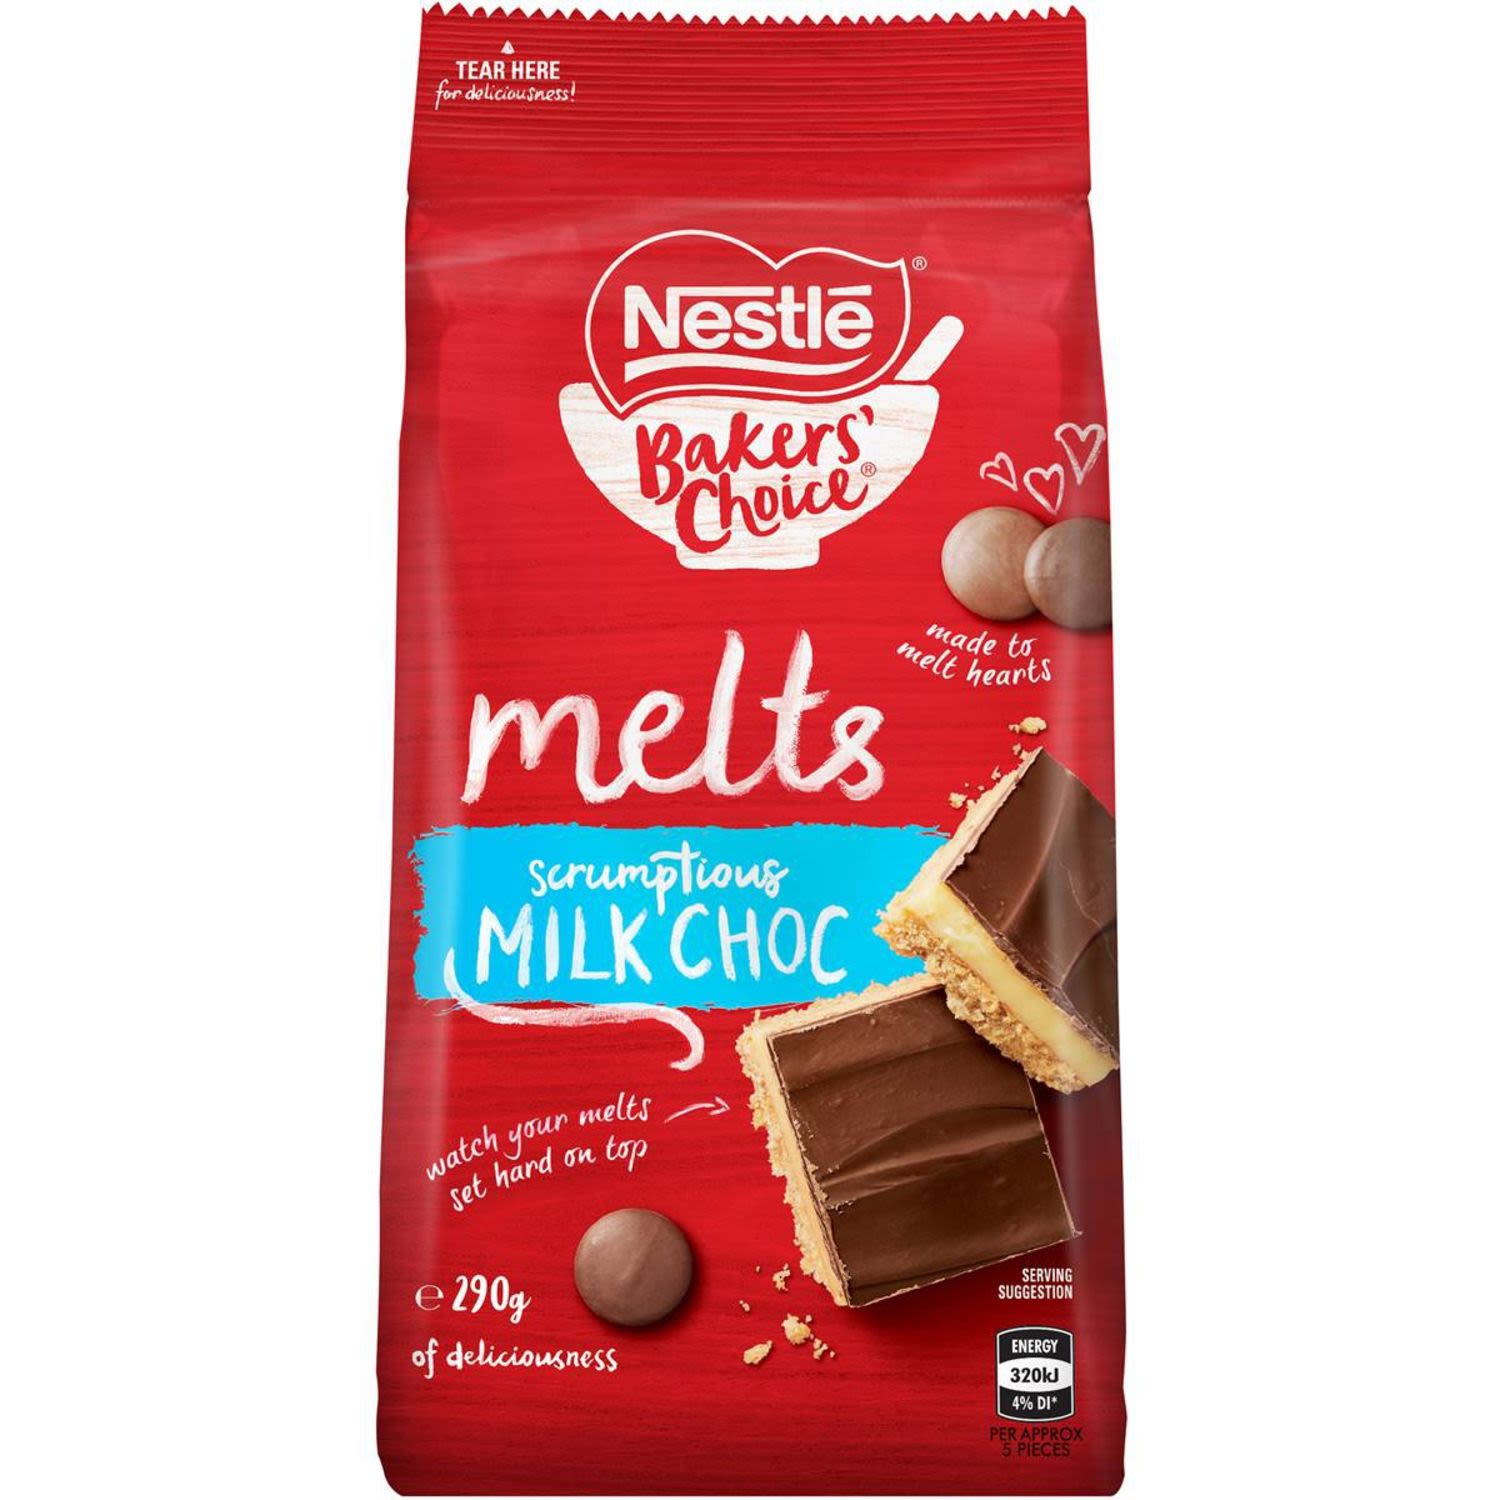 Nestlé Bakers' Choice Milk Choc Melts, 290 Gram